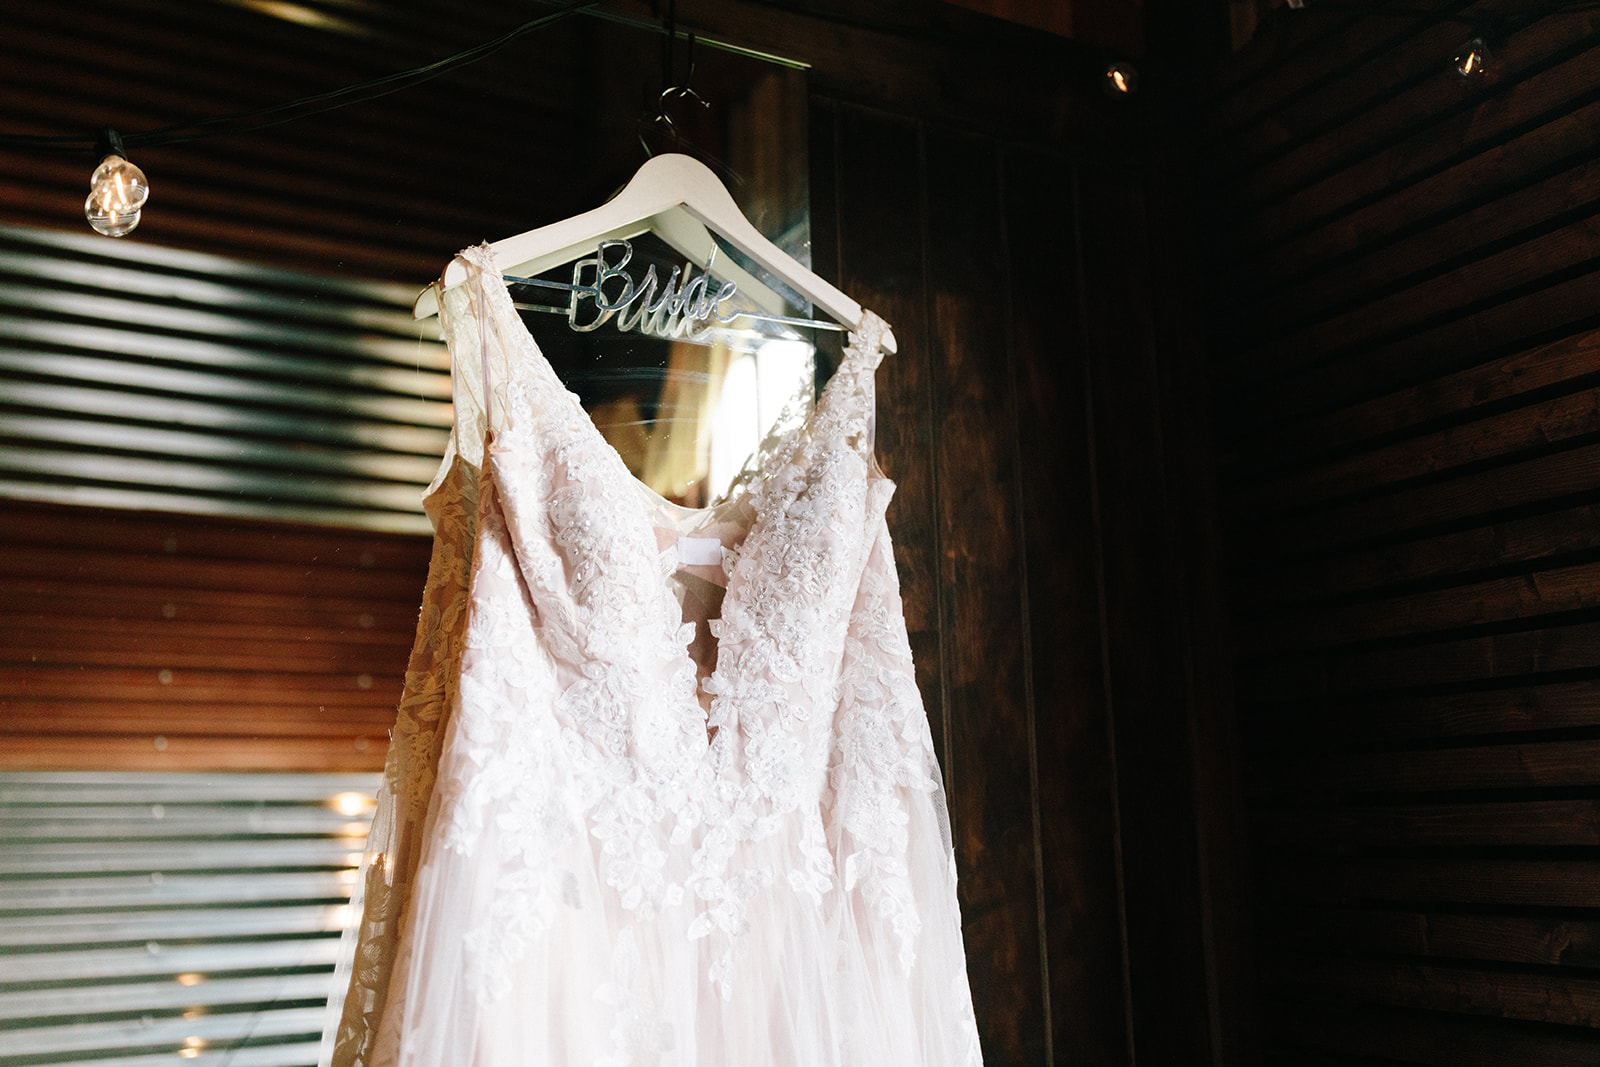 David's Bridal dress hanging